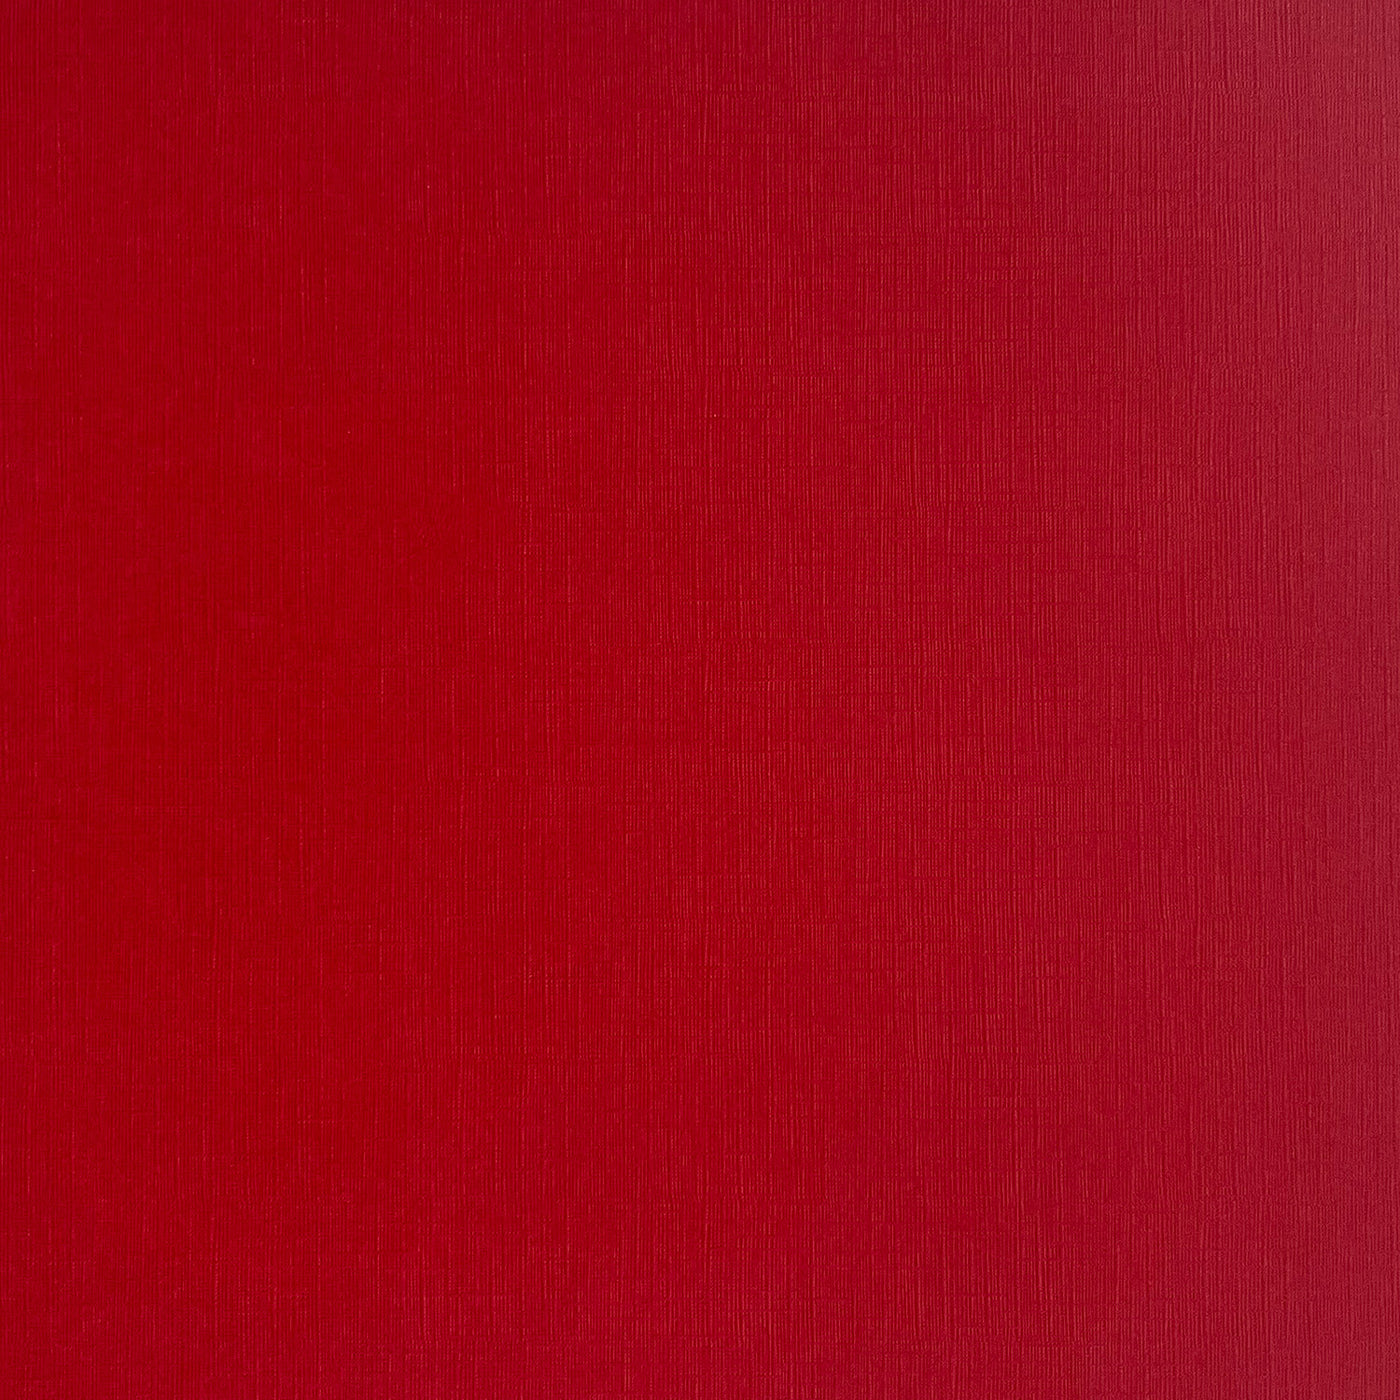 Firecracker - Textured 12x12 Cardstock - Bright red canvas scrapbook paper